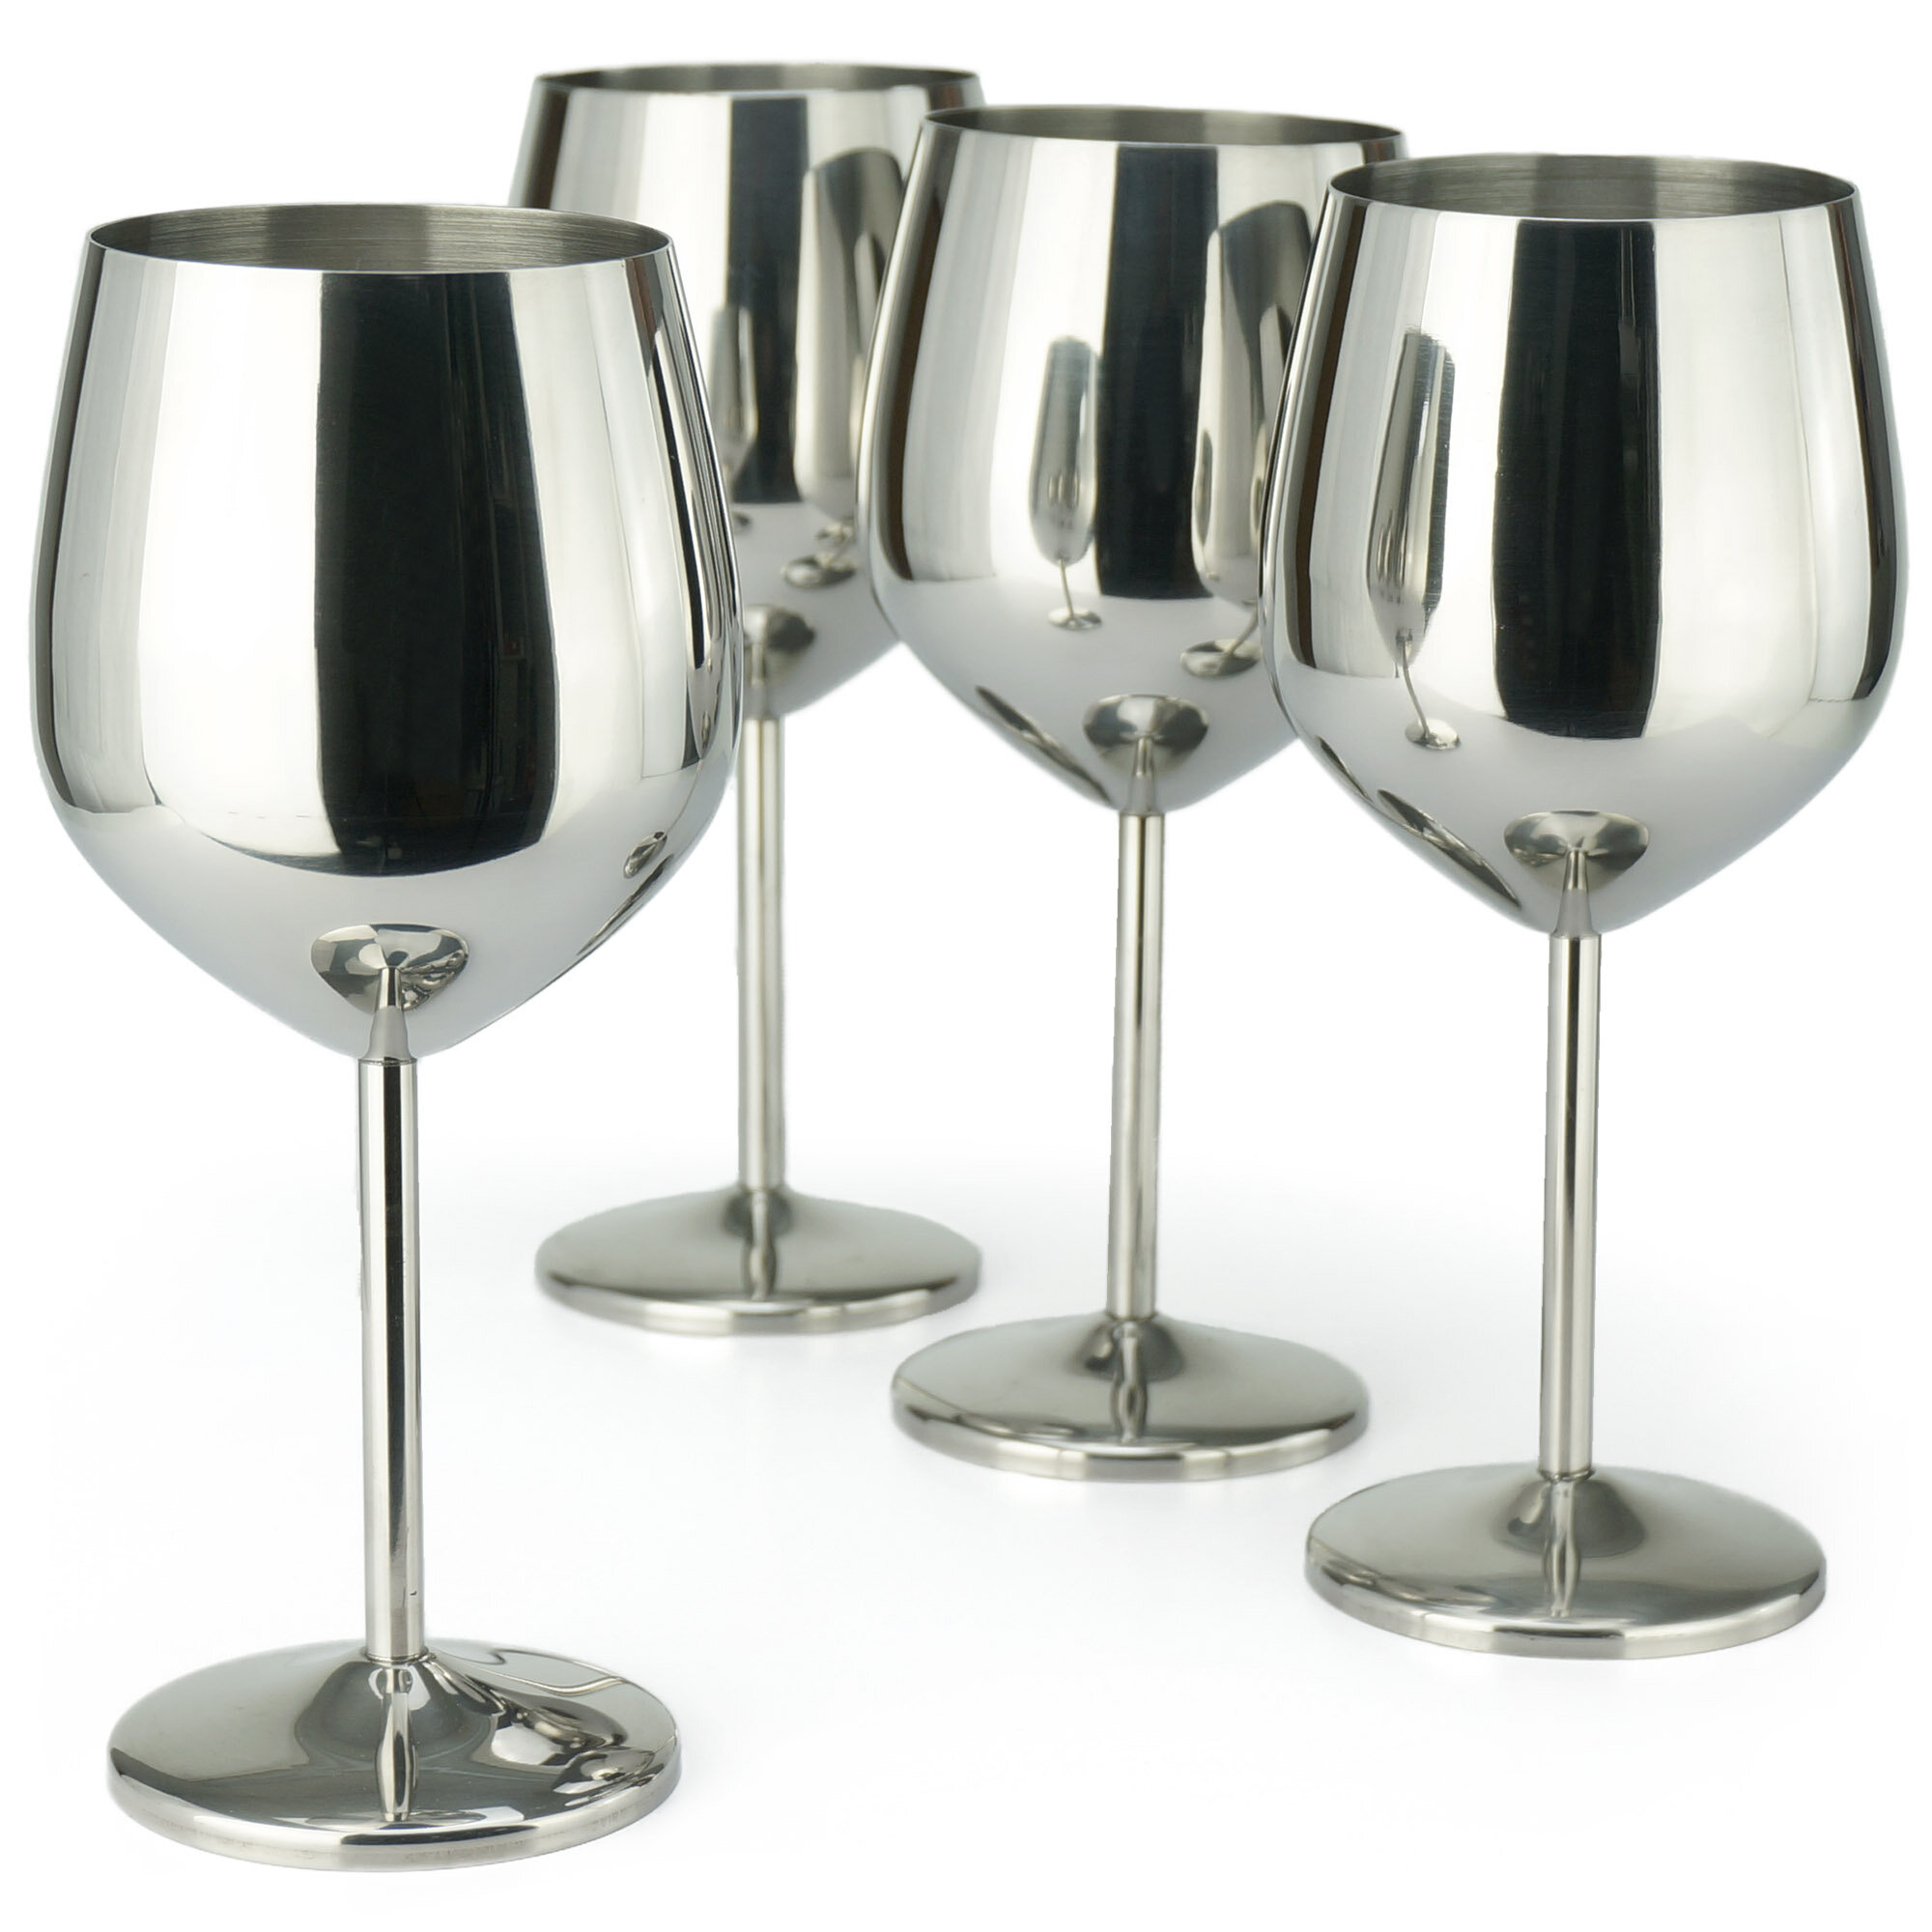 Arhaus Rosalie Assorted Cocktail Glasses (Set of 4)